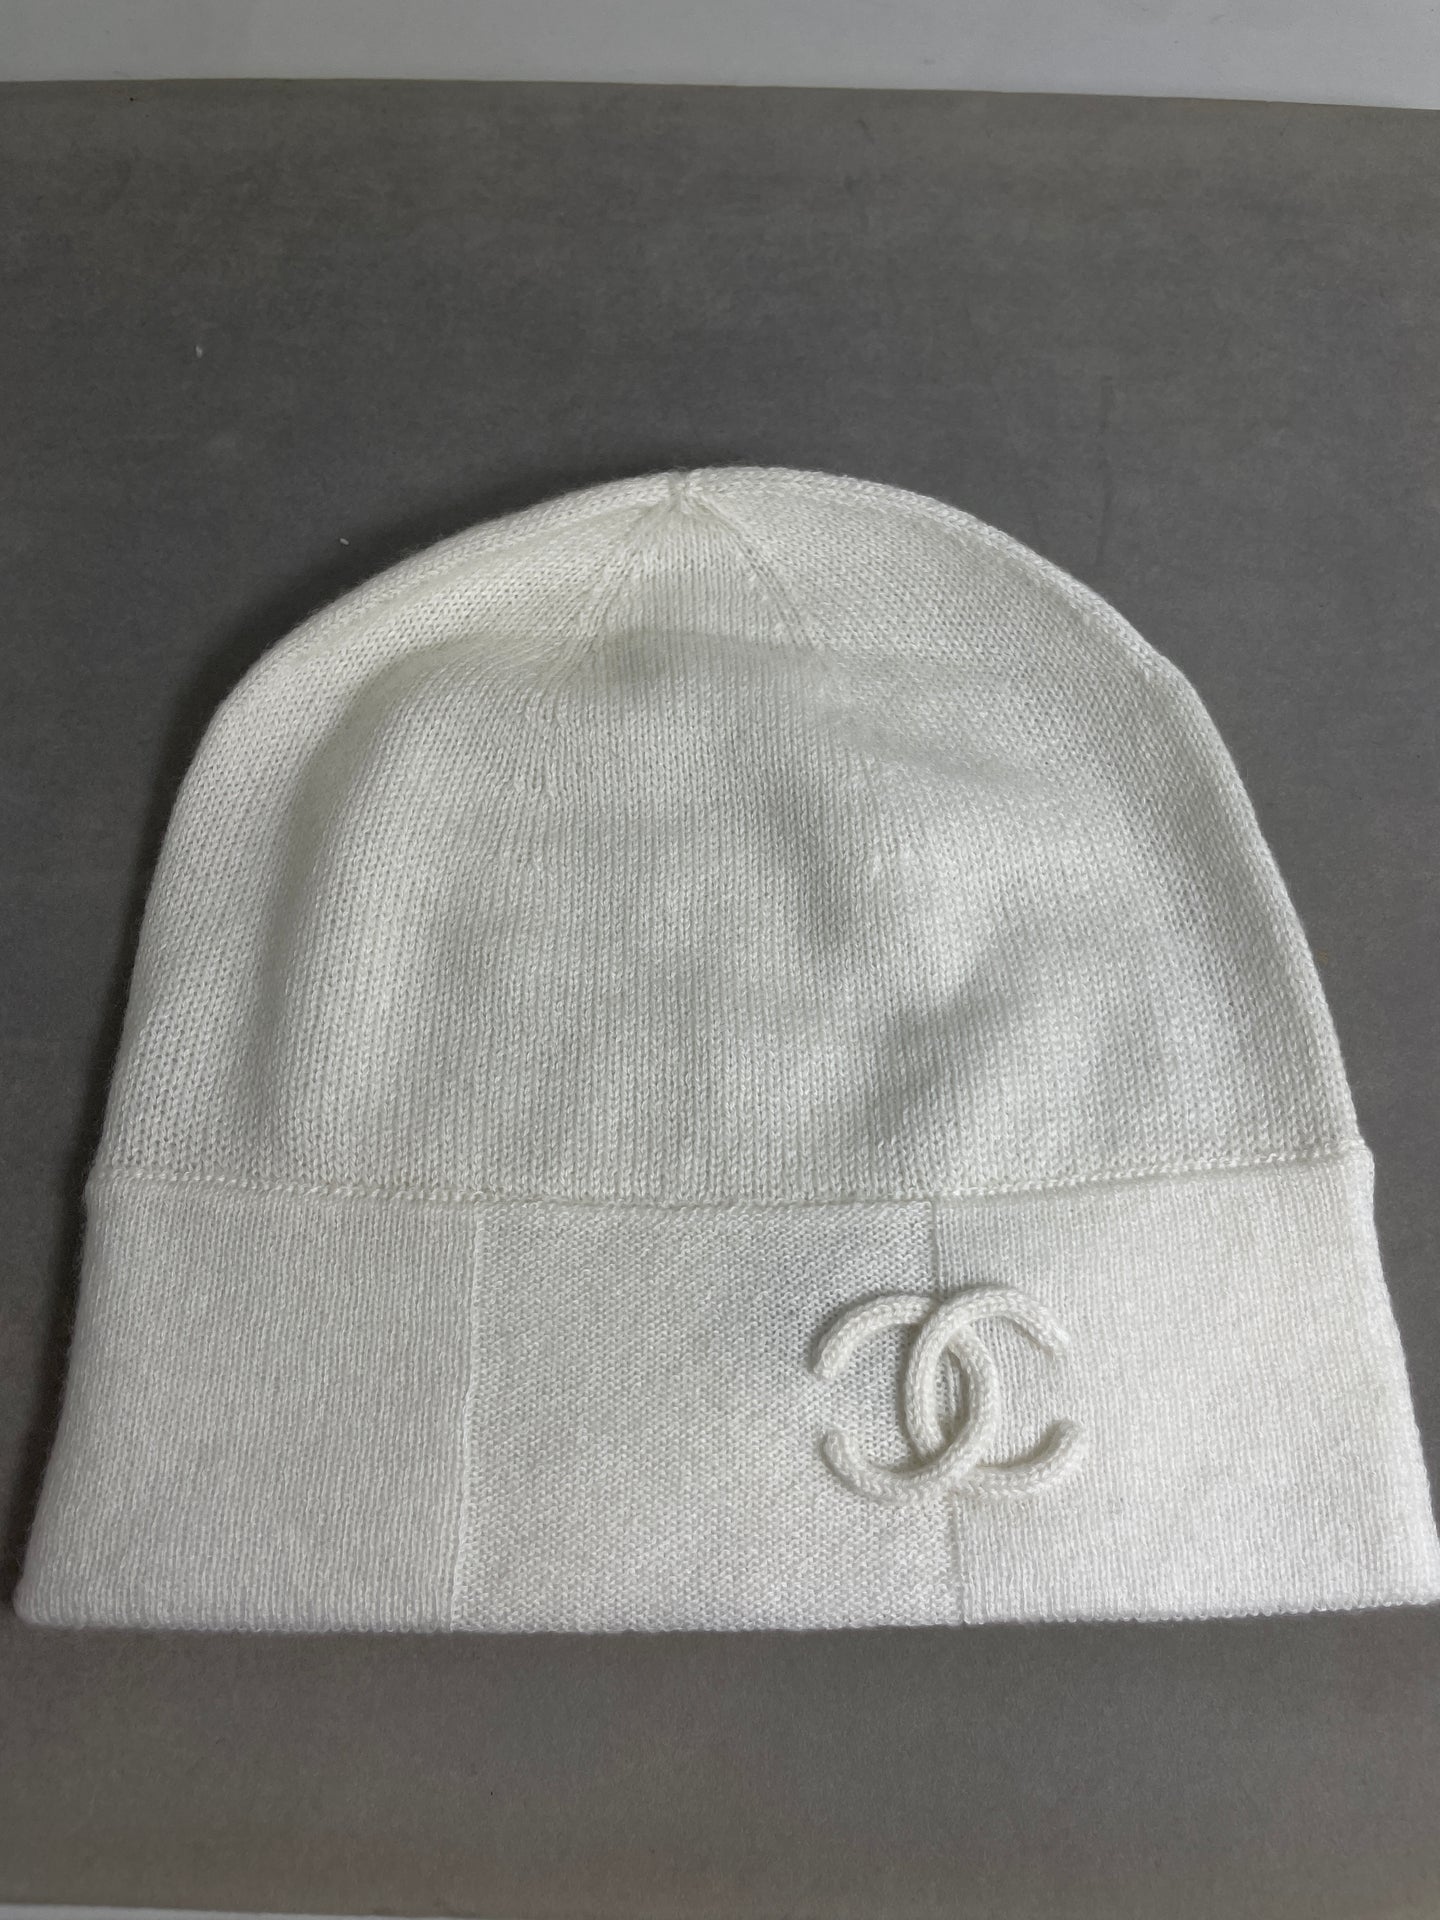 Chanel Winter White Cashmere Hat